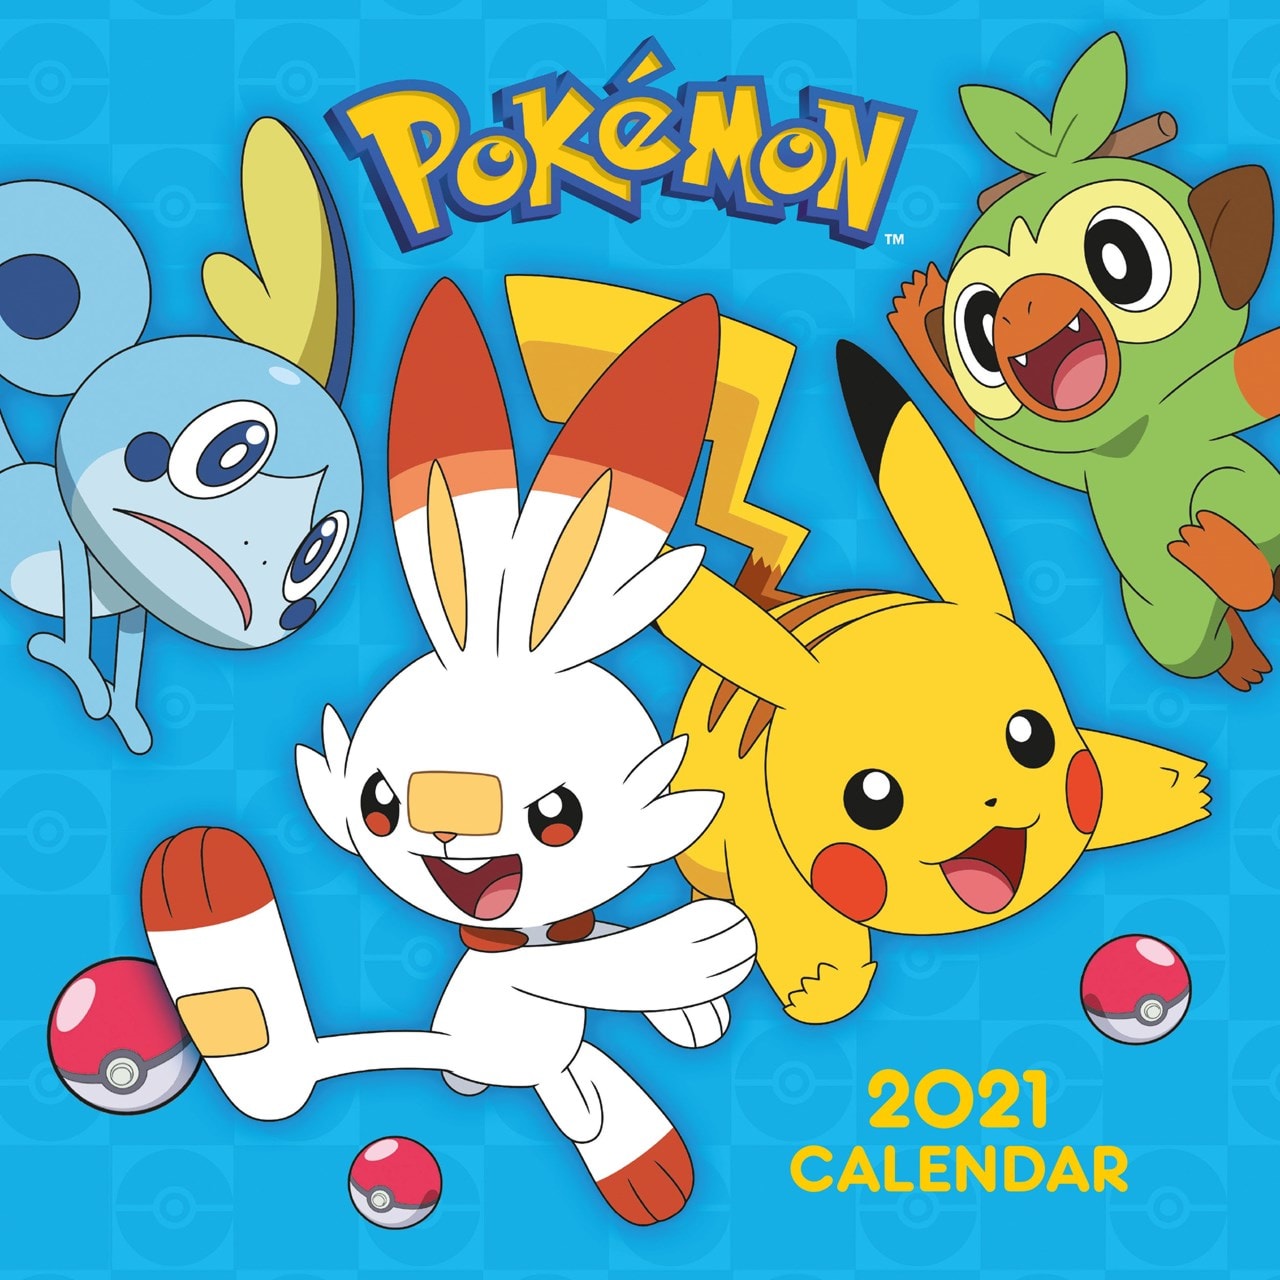 Pokemon Square 2021 Calendar Calendars Free Shipping Over 20 Hmv Store